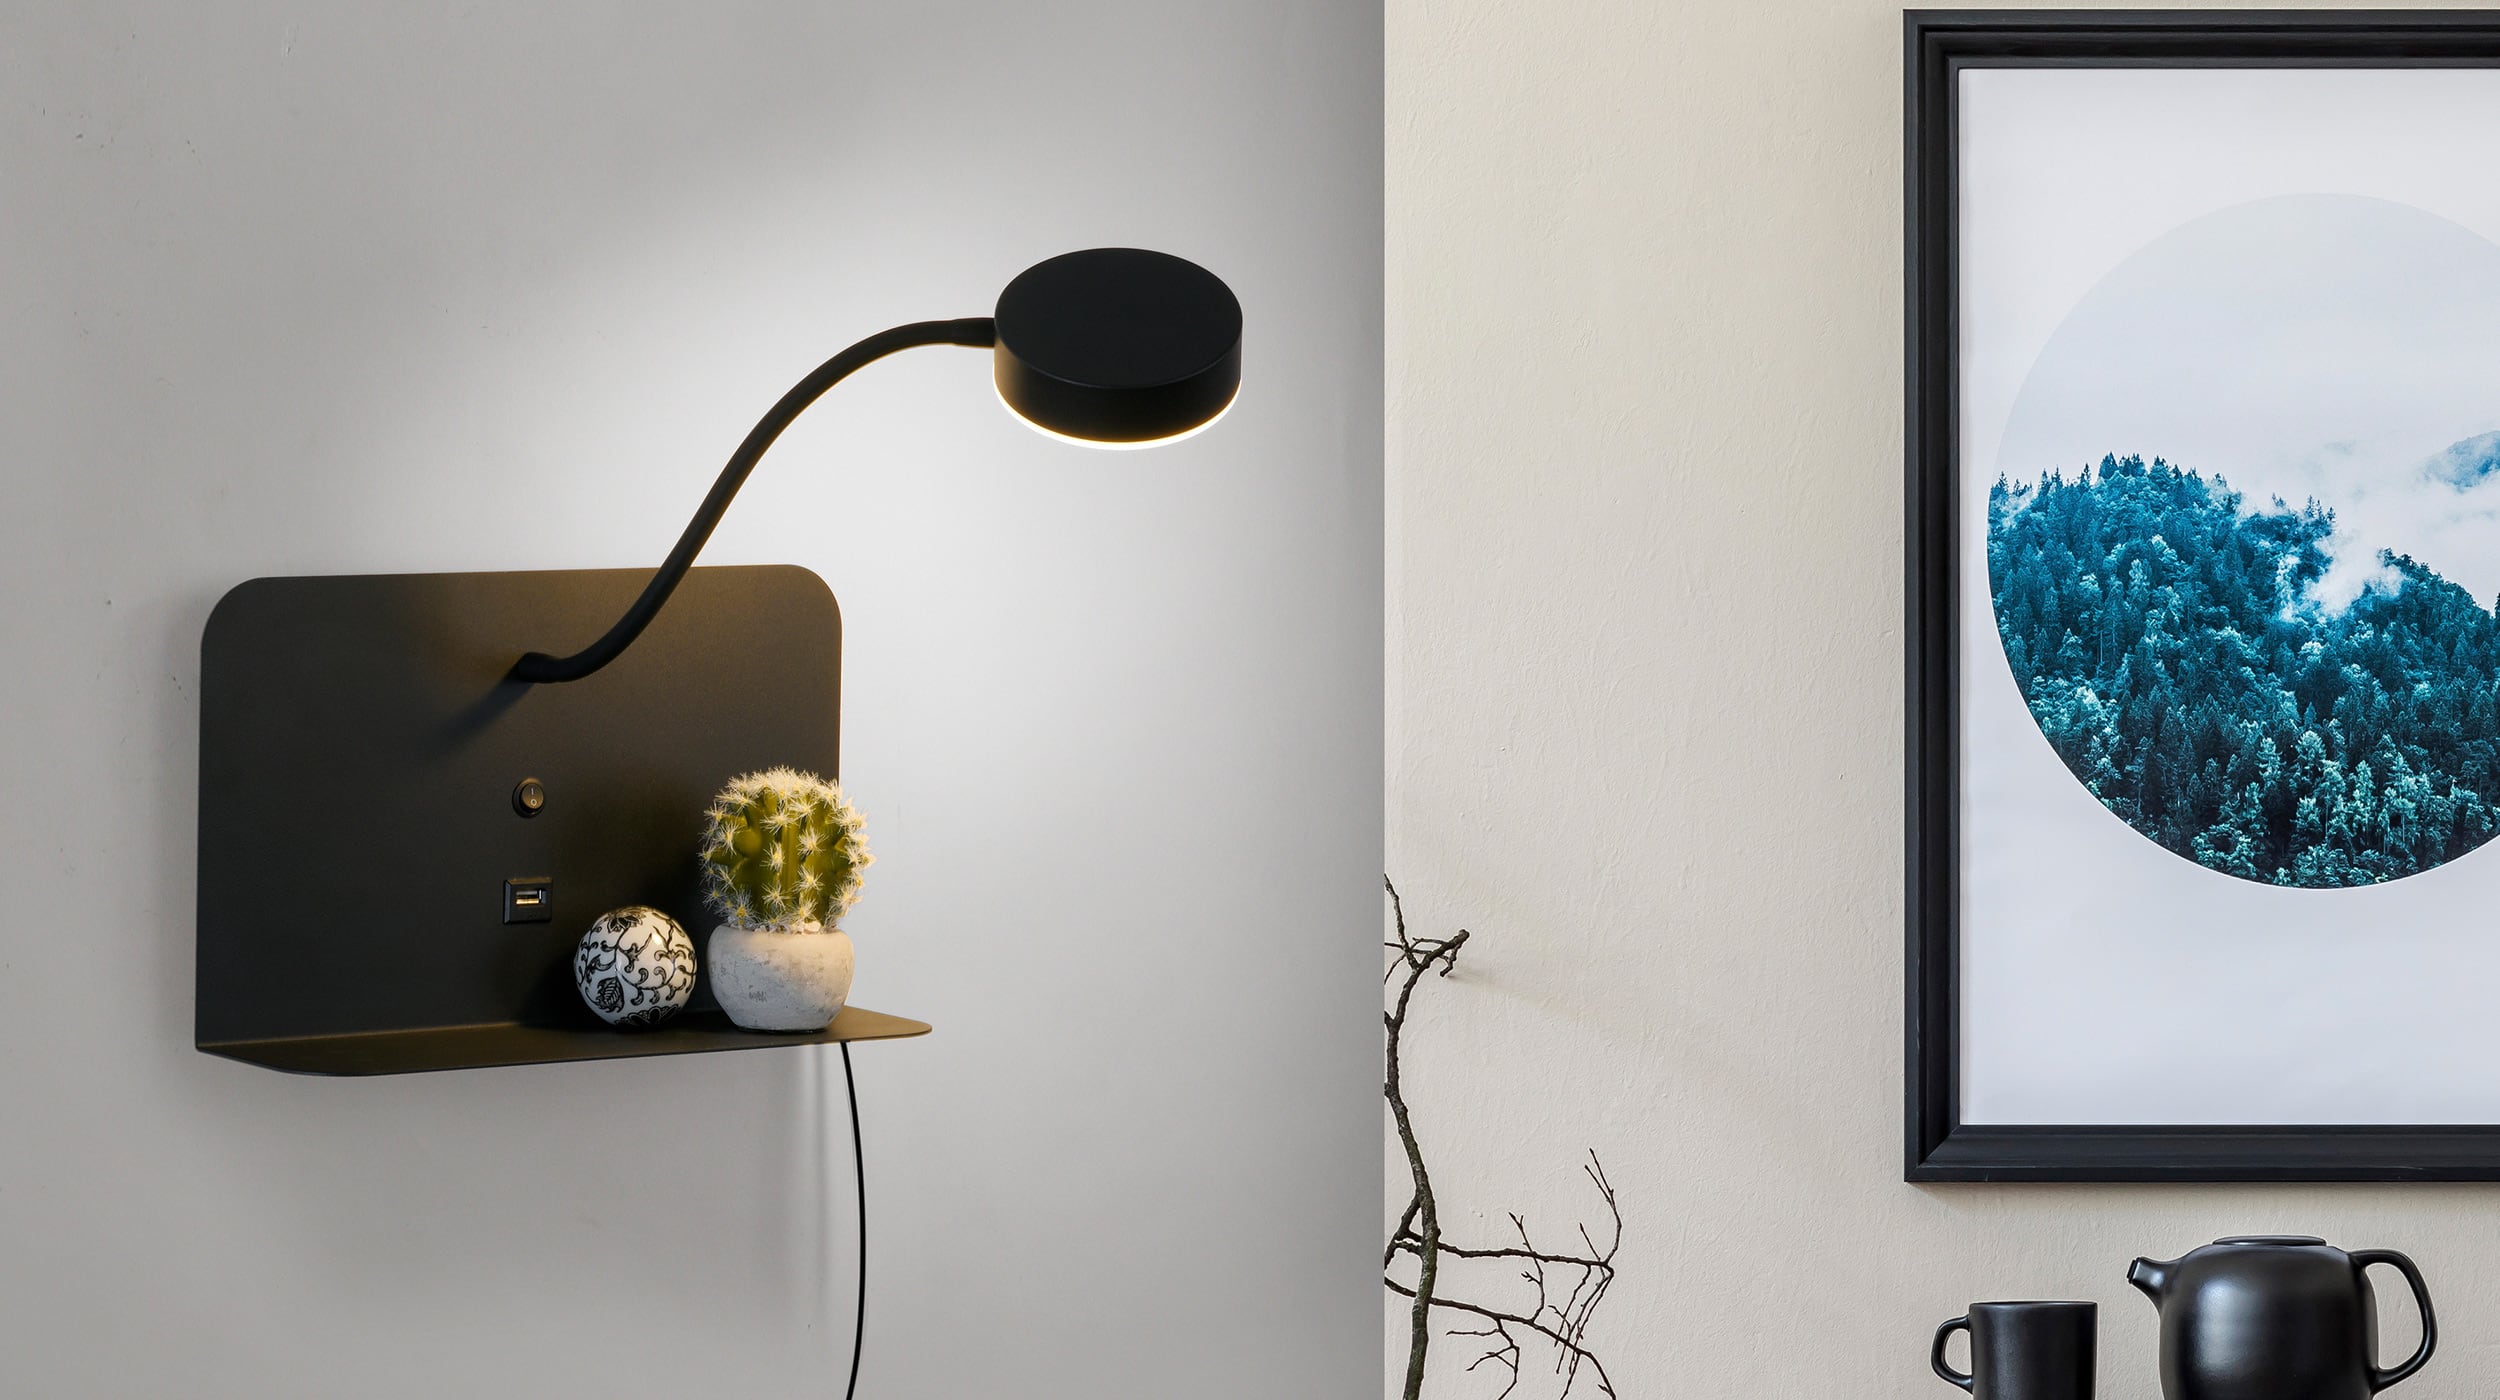 Wandlampe LED schwarz 51 cm drehbar mit Ablage - BOARD